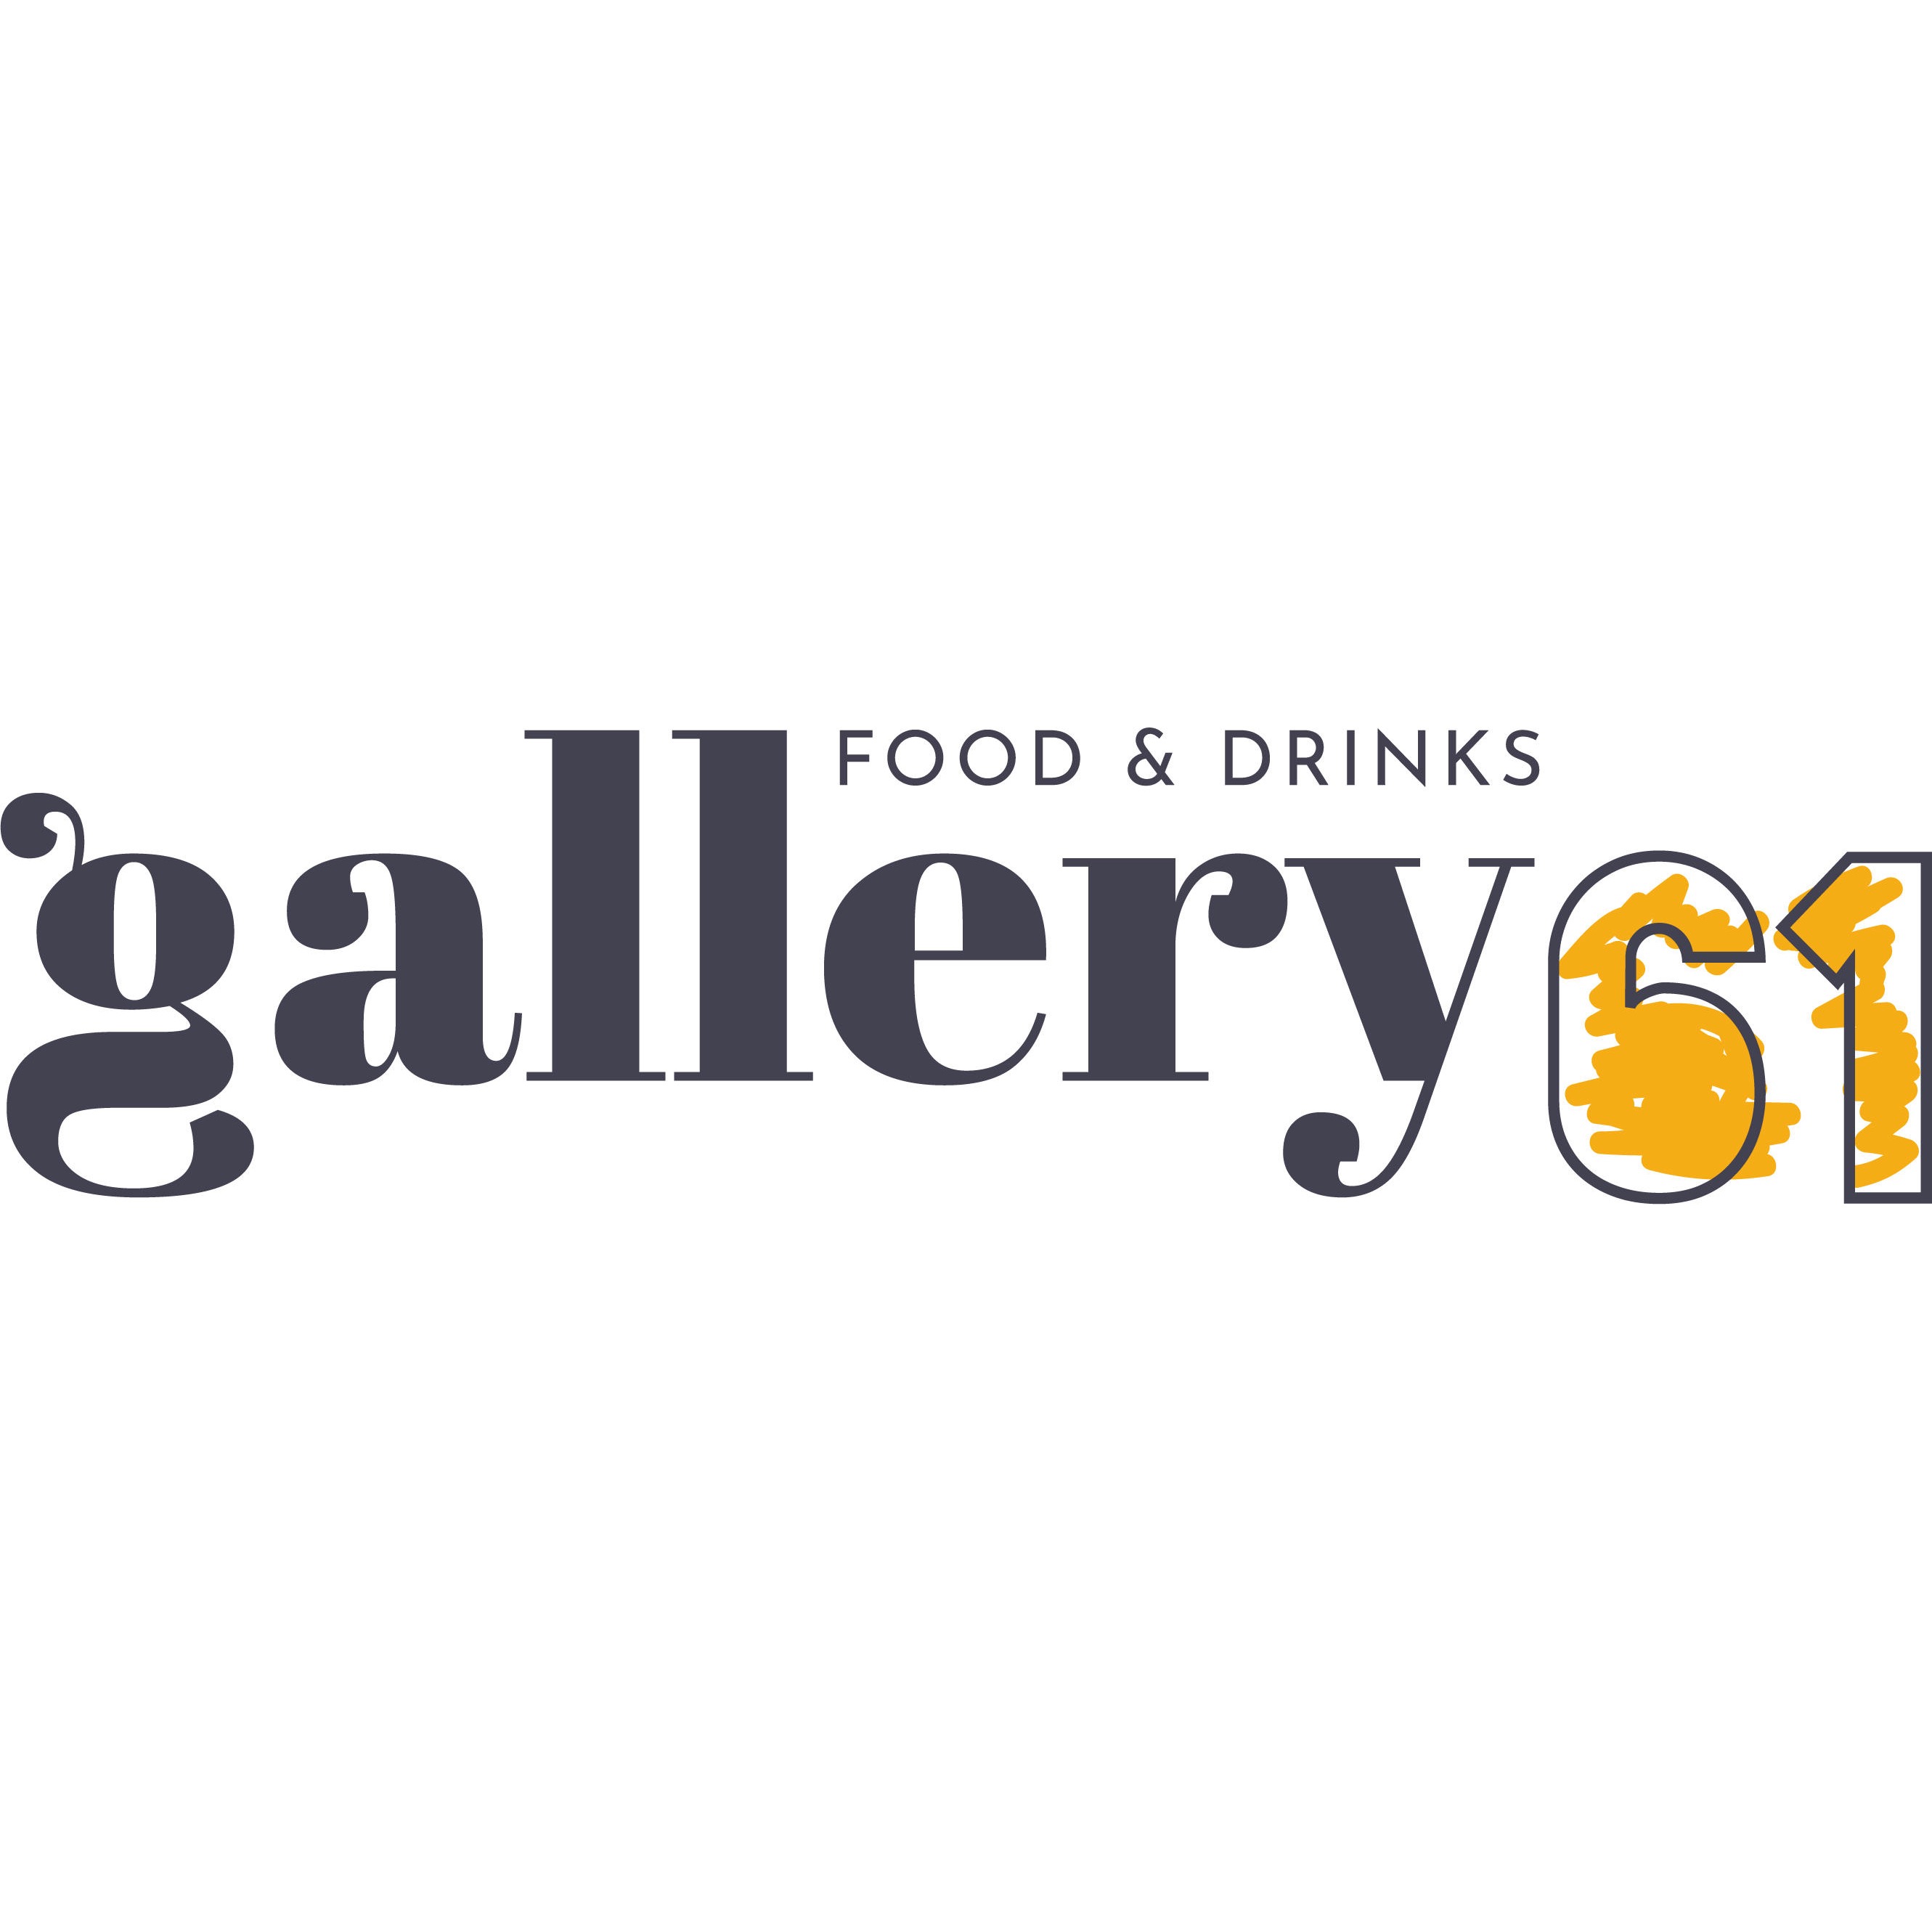 Gallery61 Logo